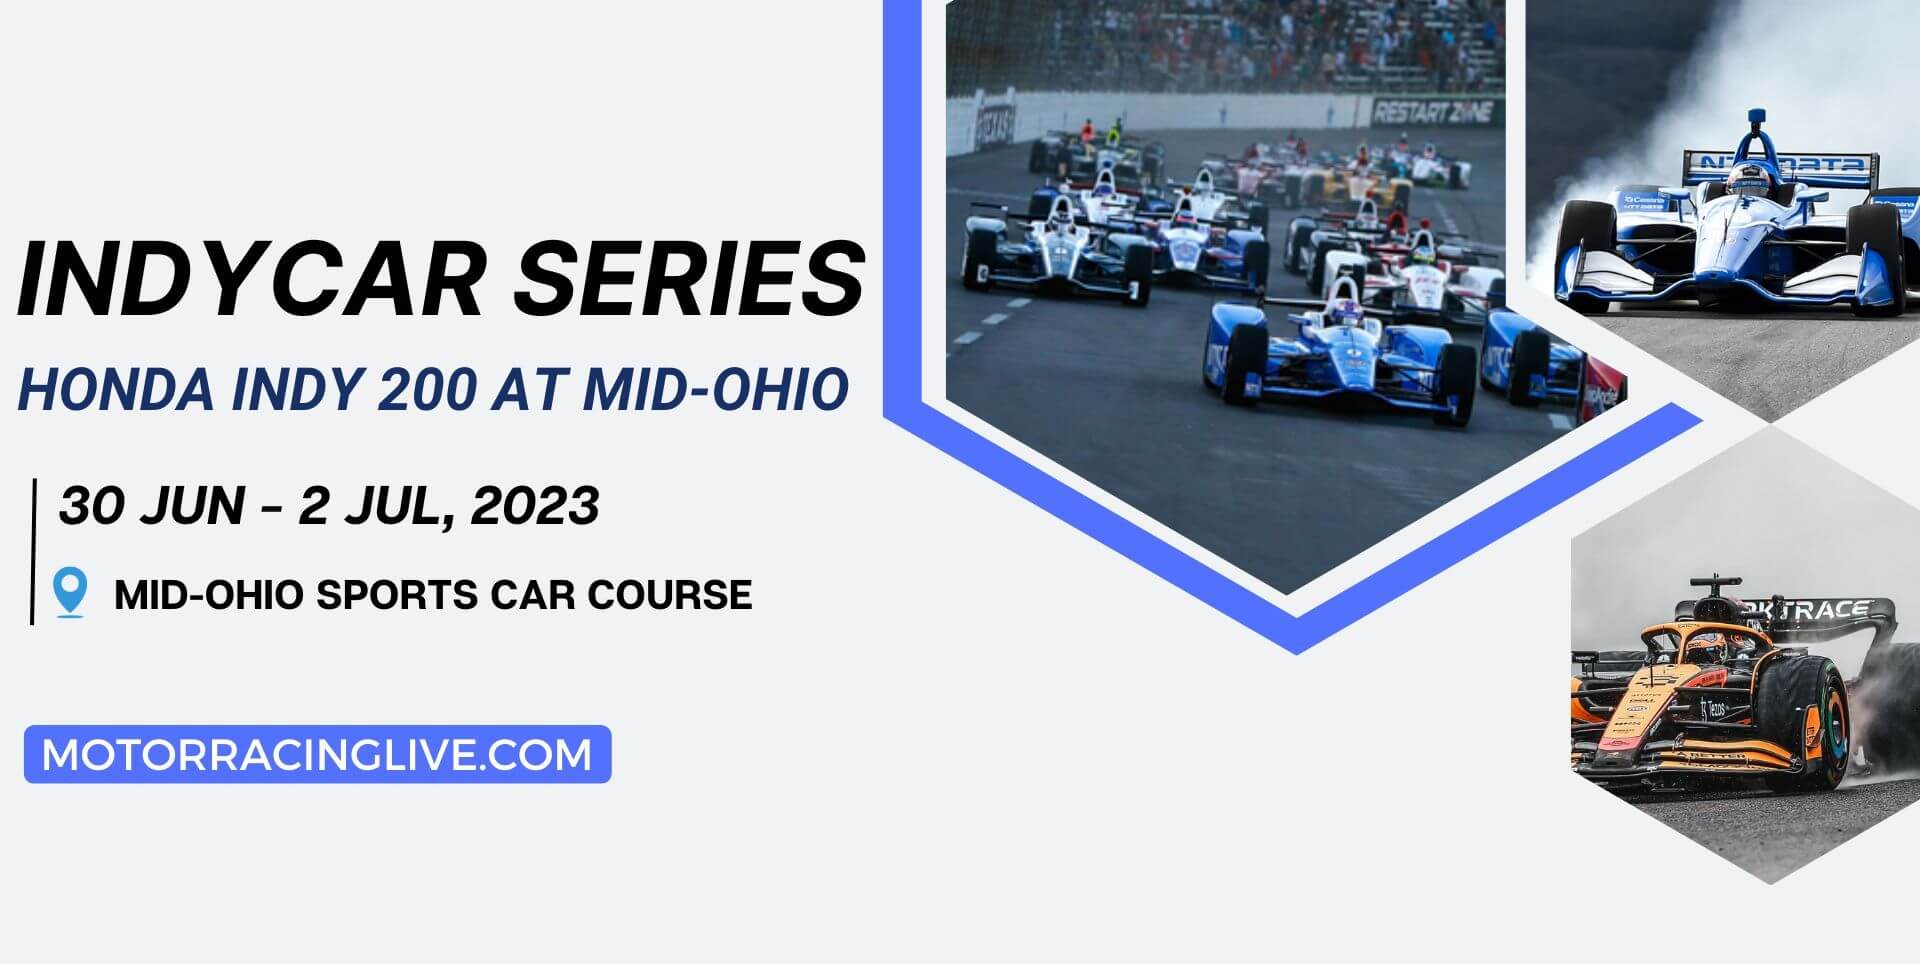 Honda Indy 200 At Mid-Ohio Live Stream 2023 | Indycar